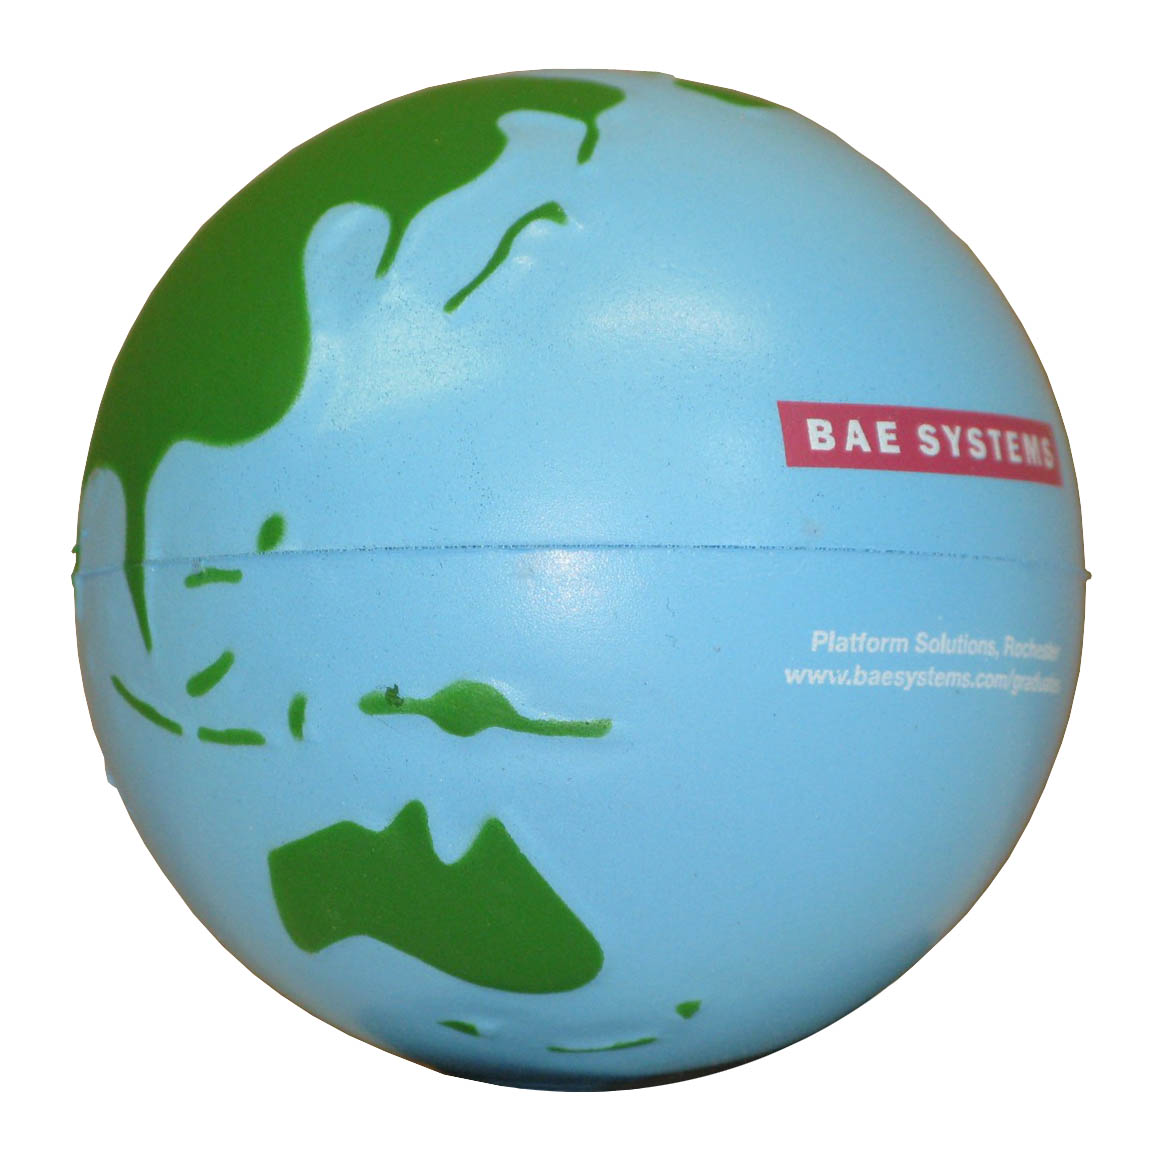 Globe Stress Ball with BAE Systems logo